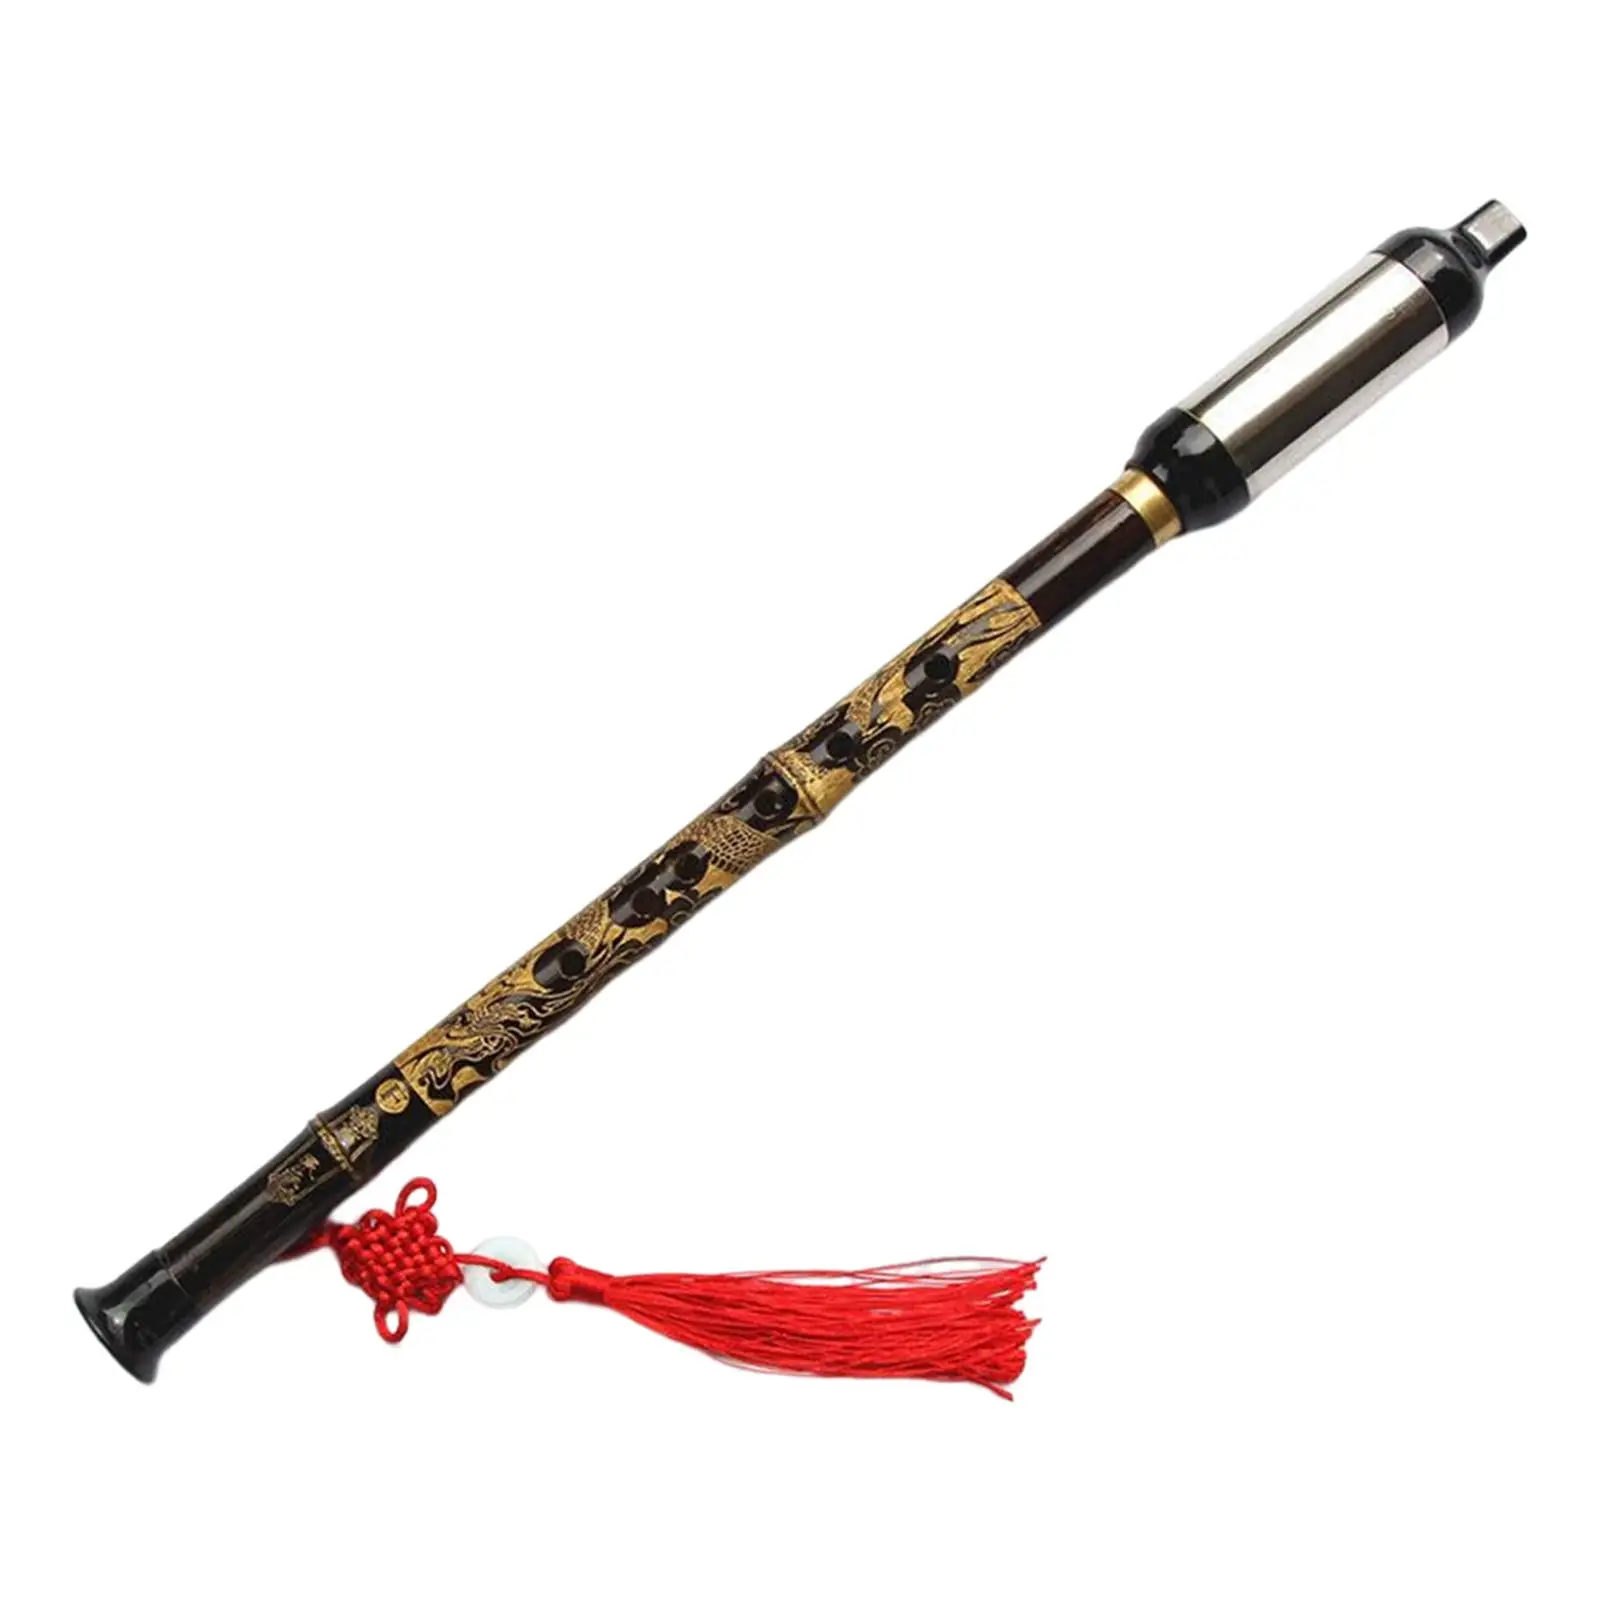 

Bamboo Bawu Tune G Flauta Bawu Bawu Flute Flute BA Wu Pipe Vertical Bawu Professional Woodwind Chinese Bawu Pipe for Practicing